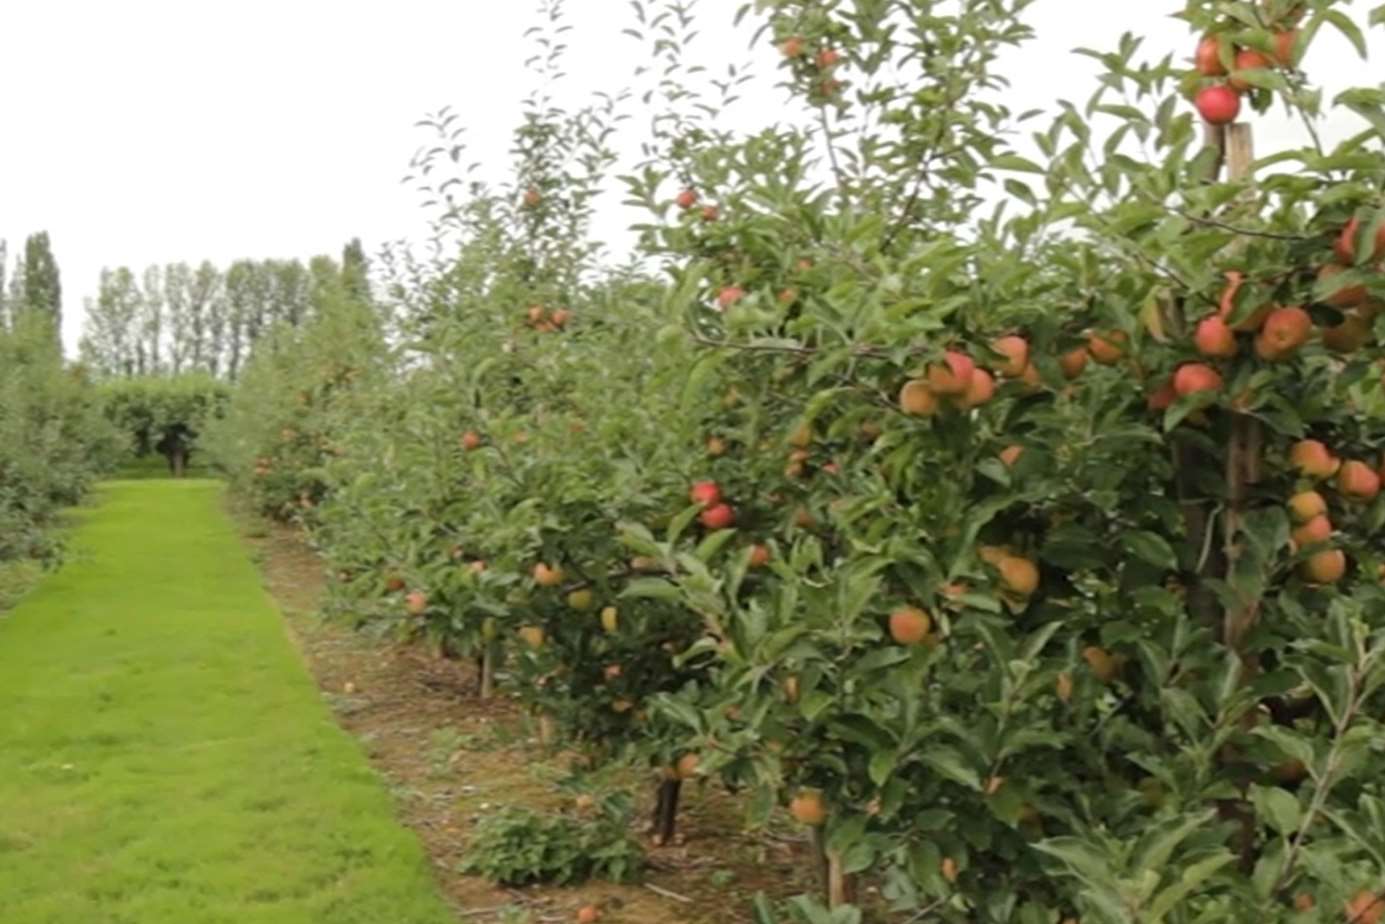 Cox apples at Broadwater Farm, near West Malling